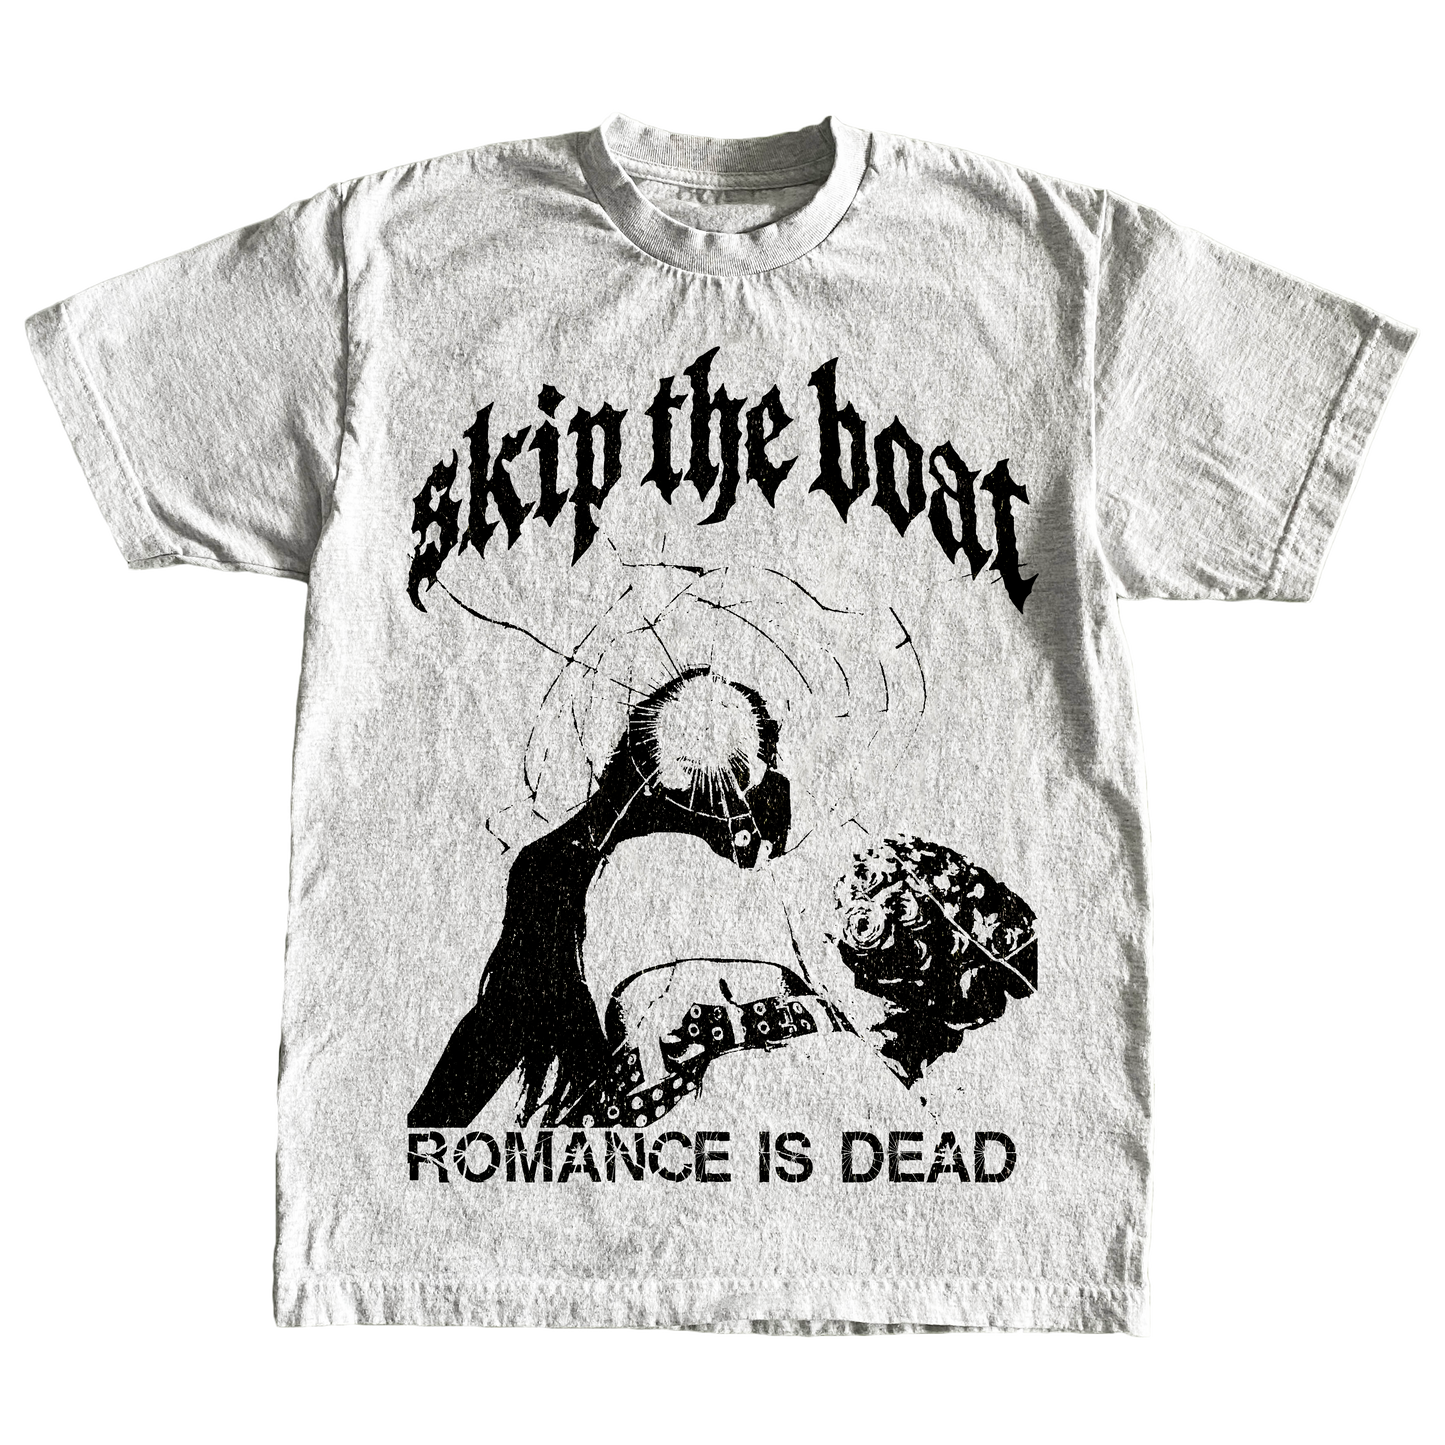 THE "DEAD ROMANCE" TEE